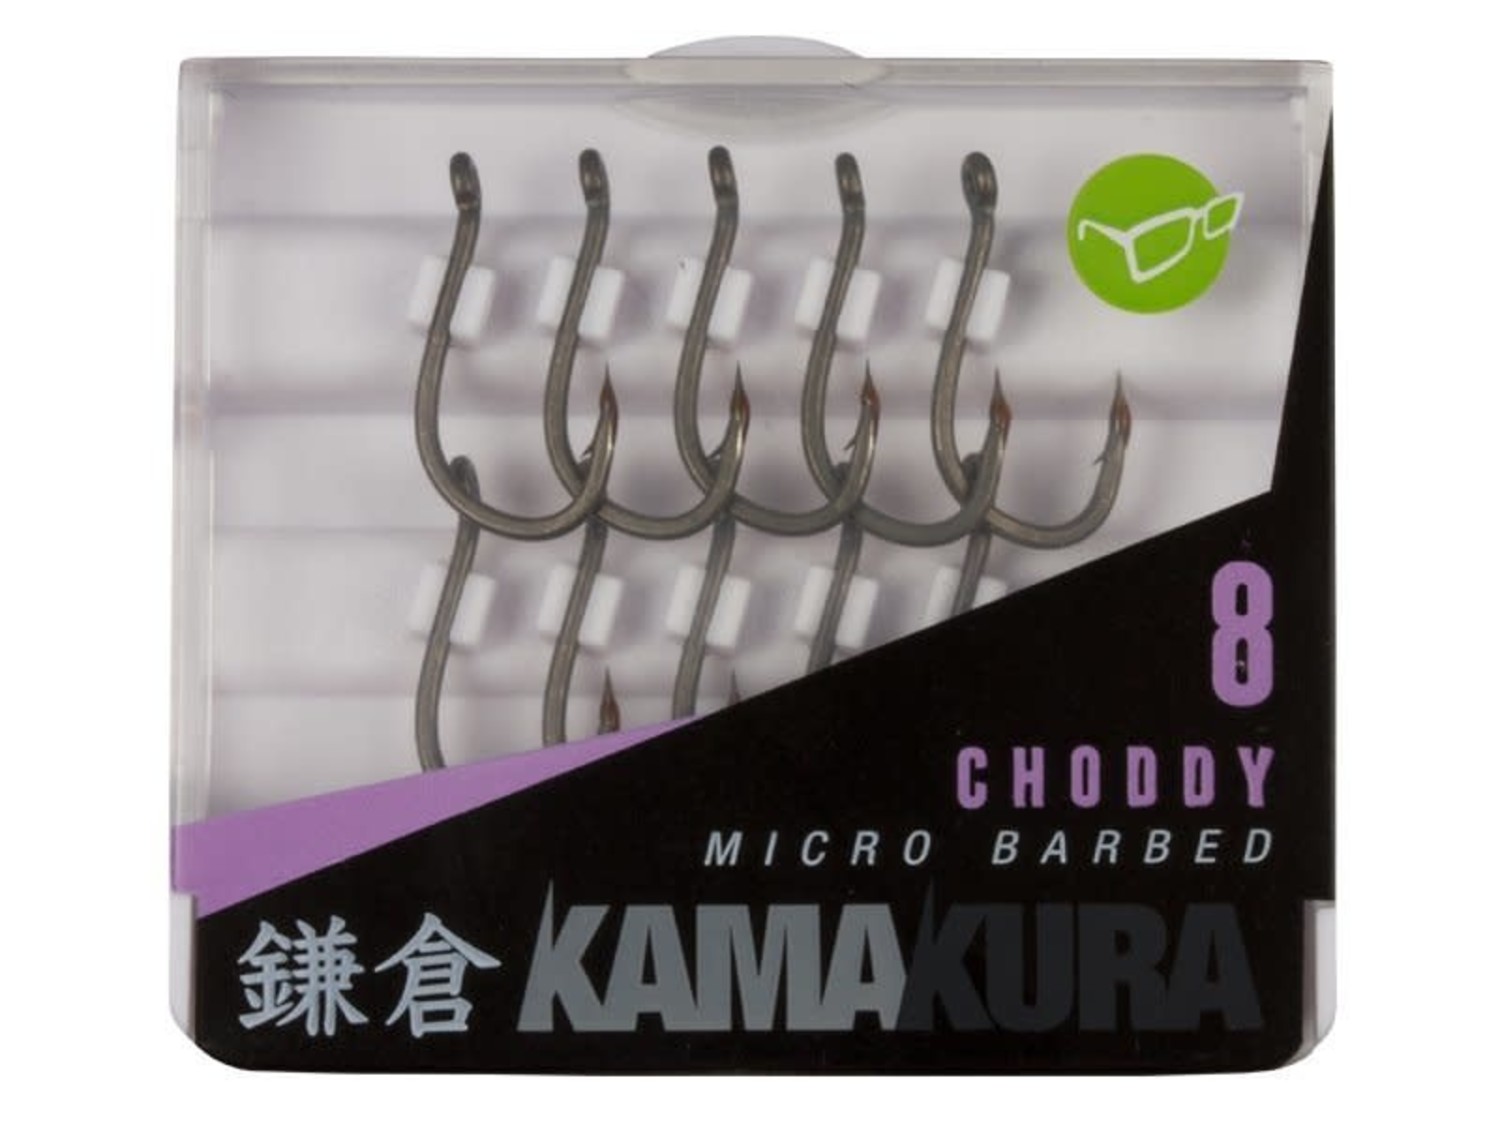 Korda Kamakura Choddy Micro Barbed (10 pcs) - Reniers Fishing